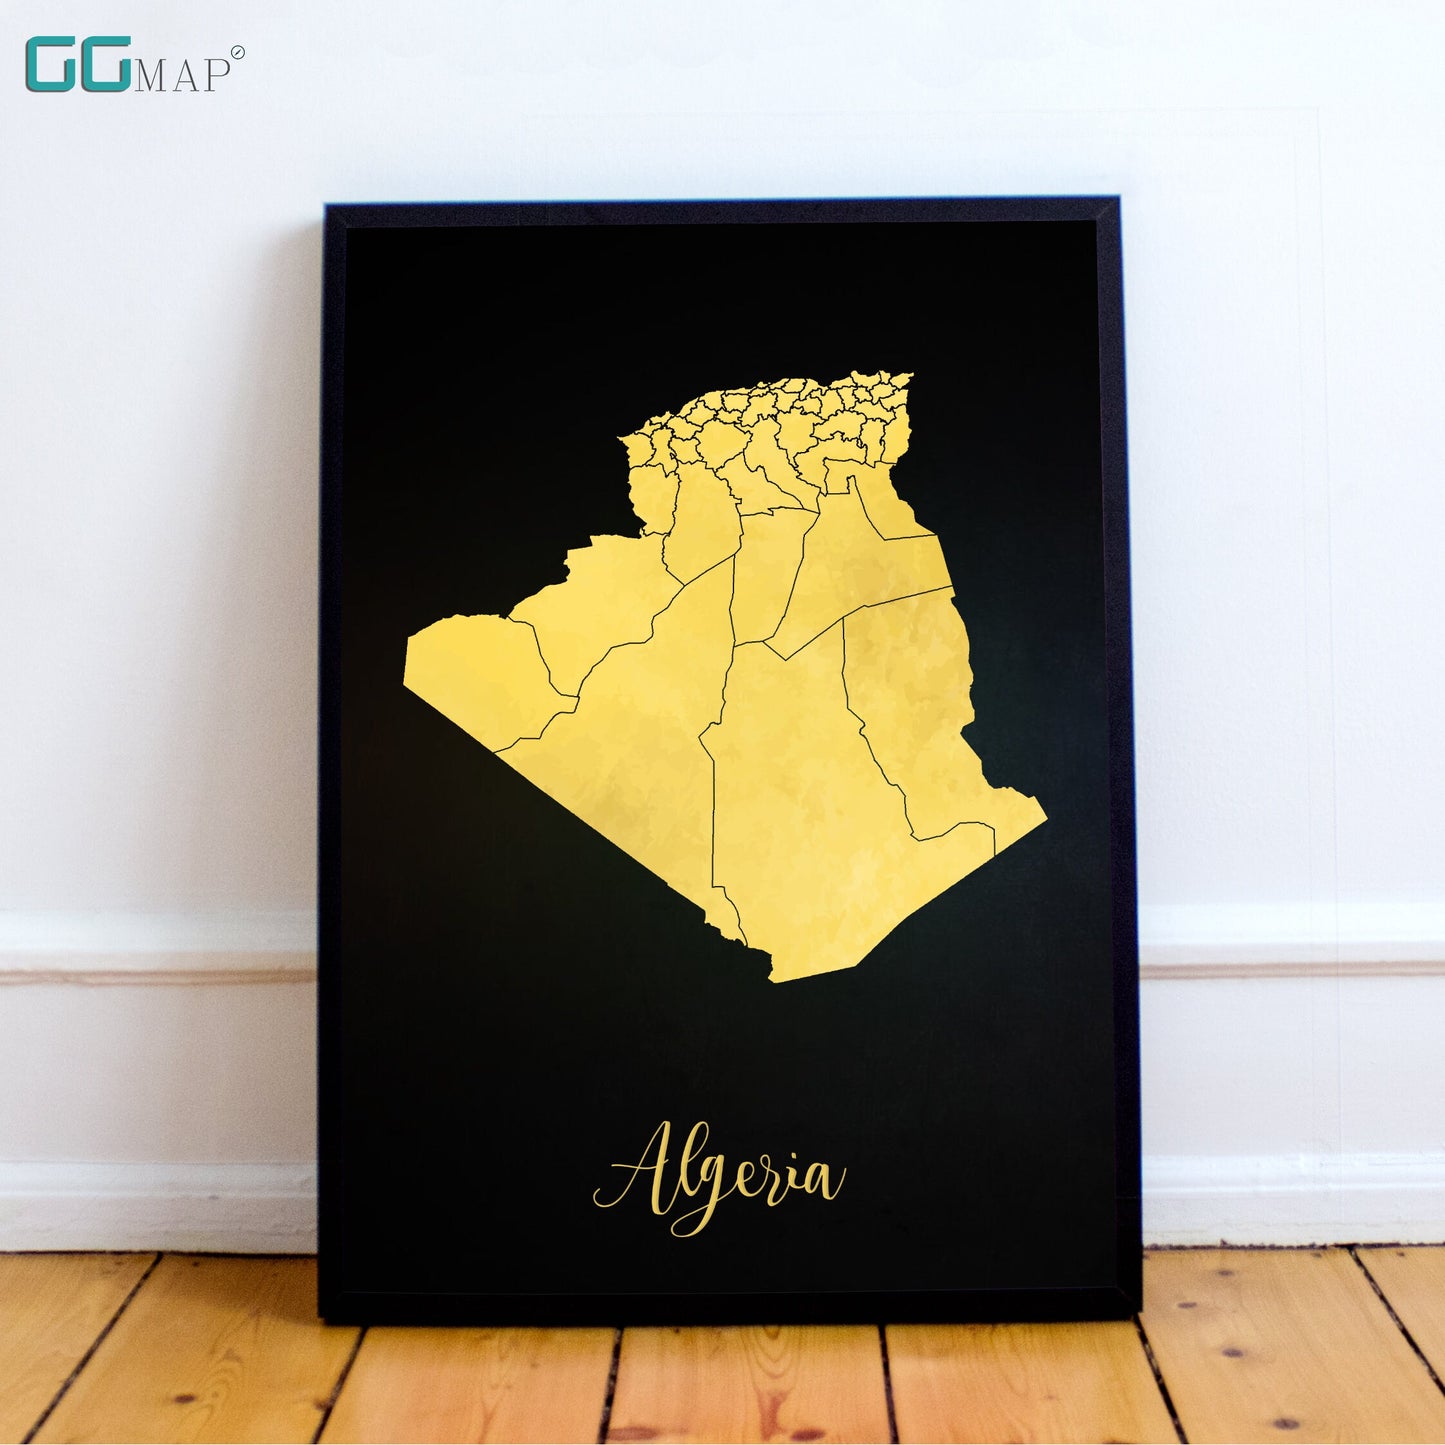 ALGERIA map - Algeria gold map - Travel poster - Home Decor - Wall decor - Office map - Algeria gift - GGmap - Algeria poster